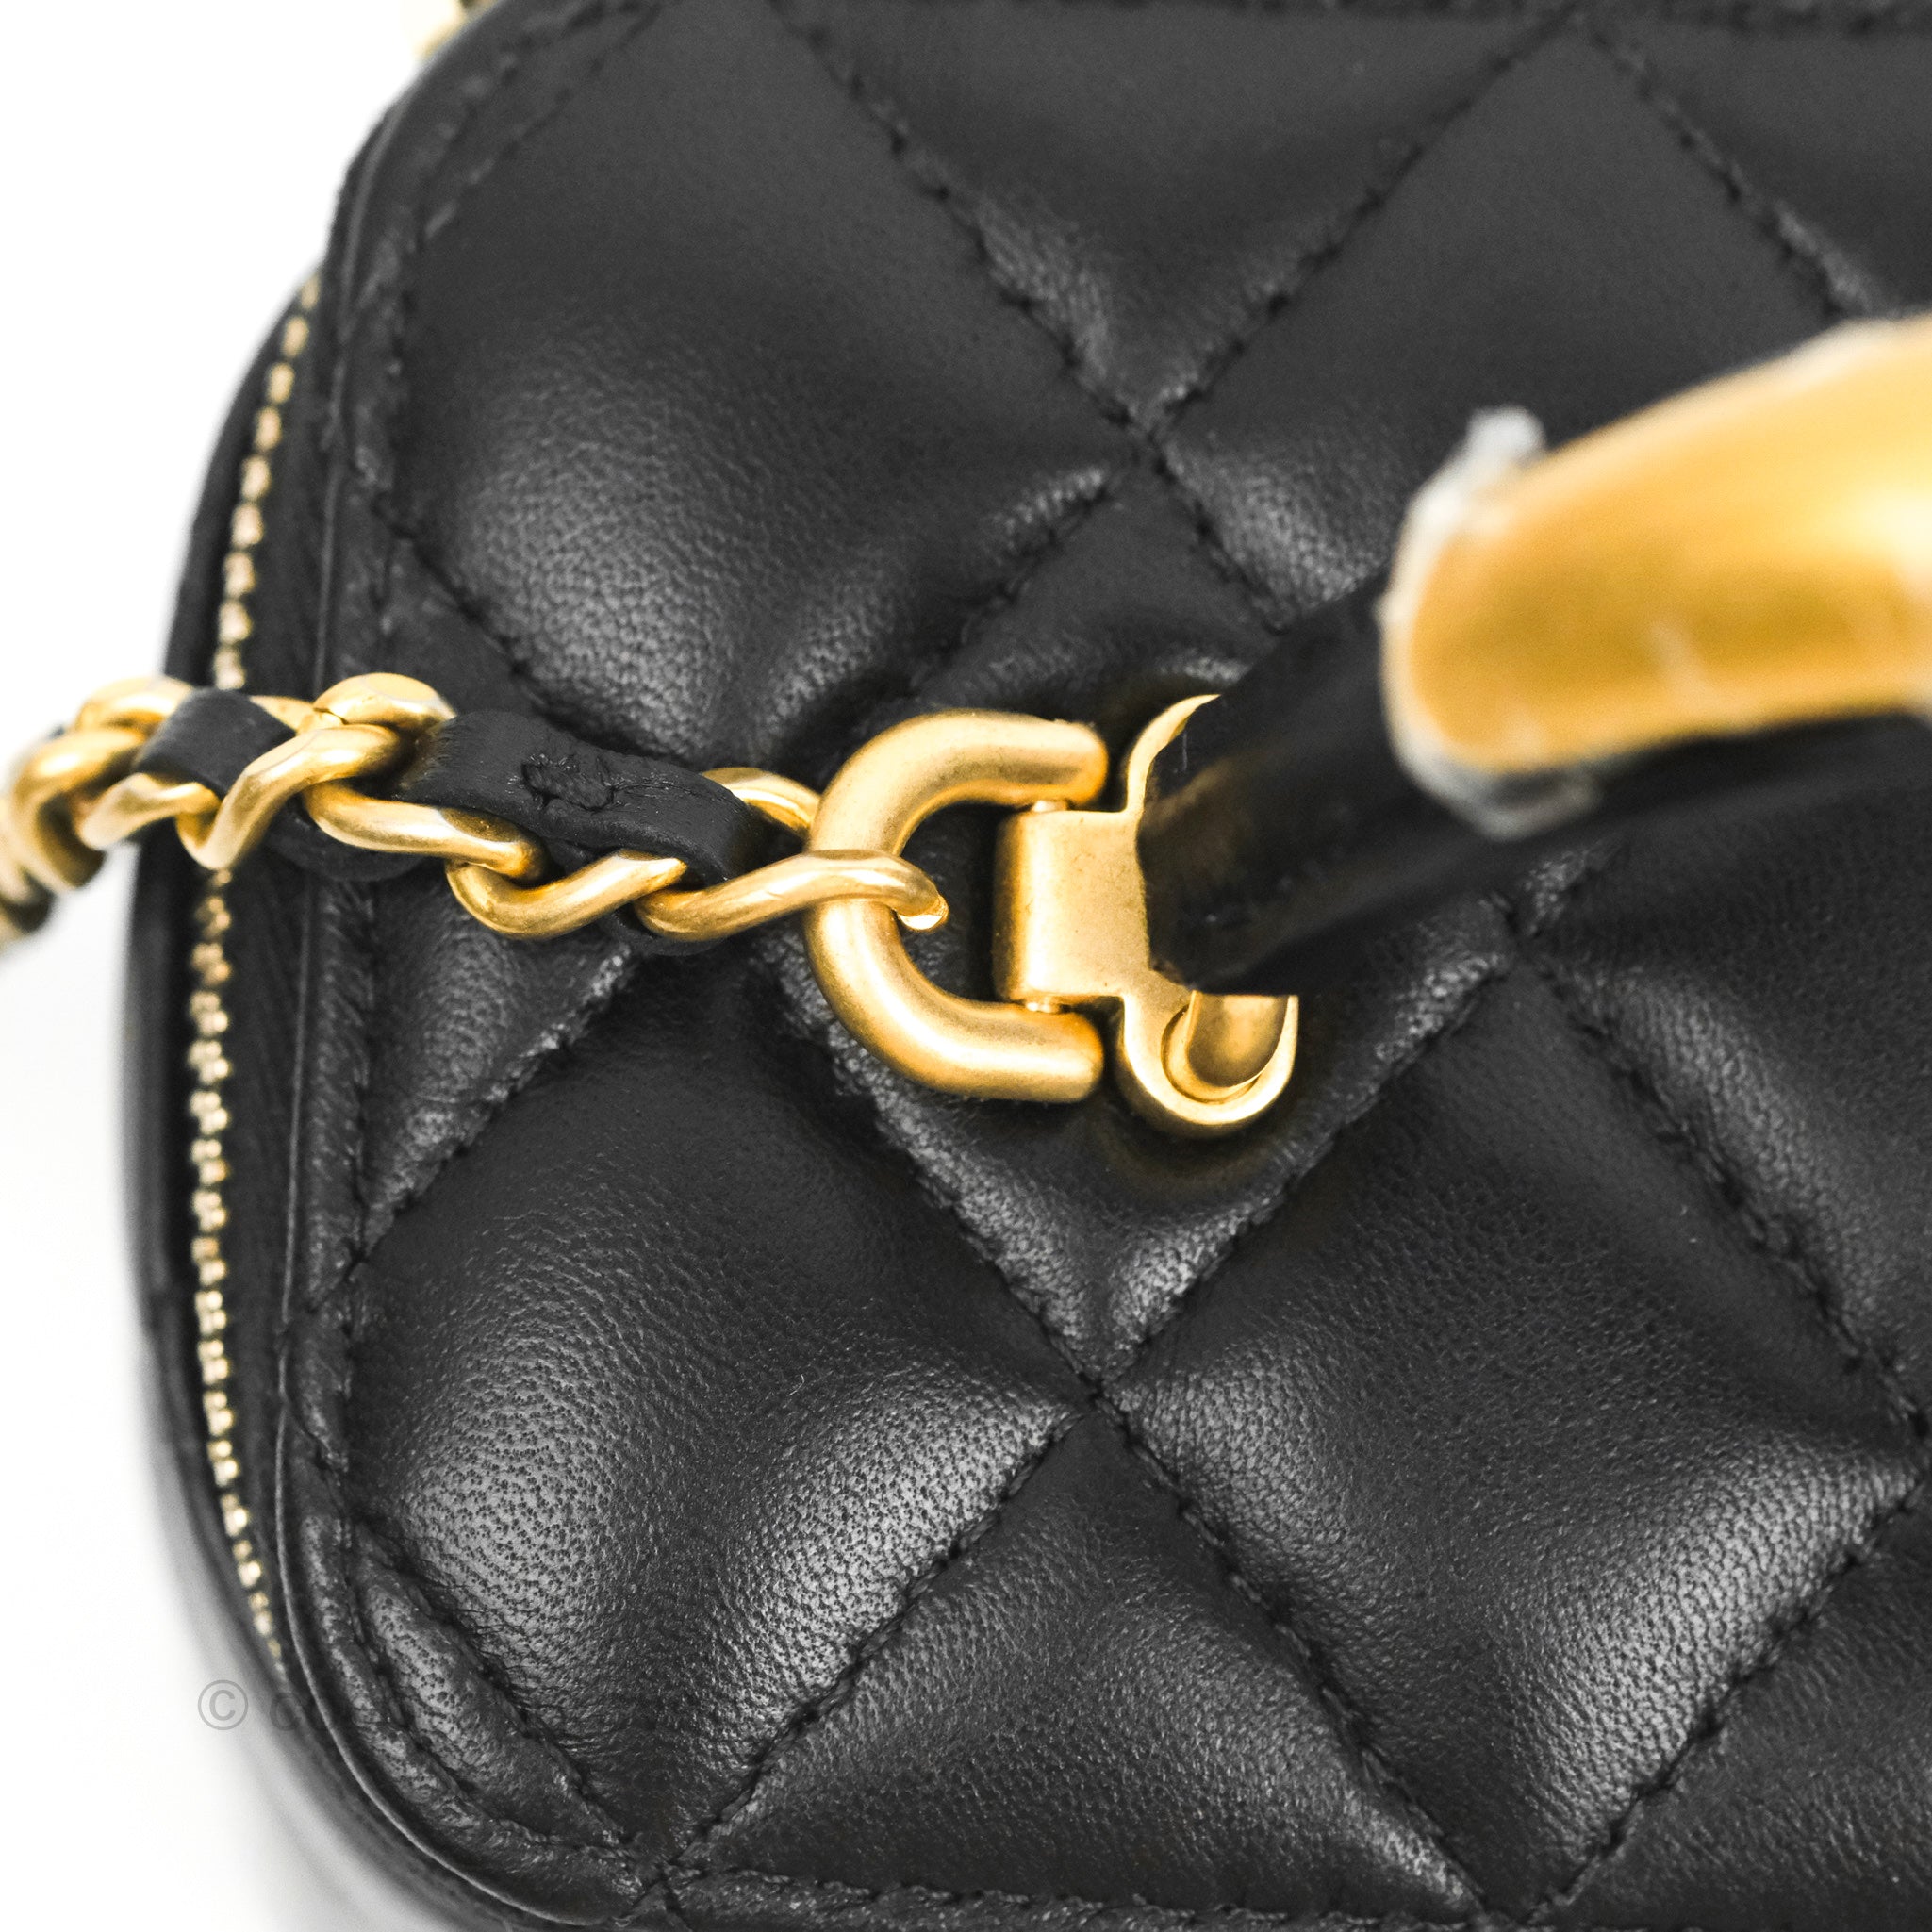 Fashion « Chanel-Vuitton », Sale n°2089, Lot n°134